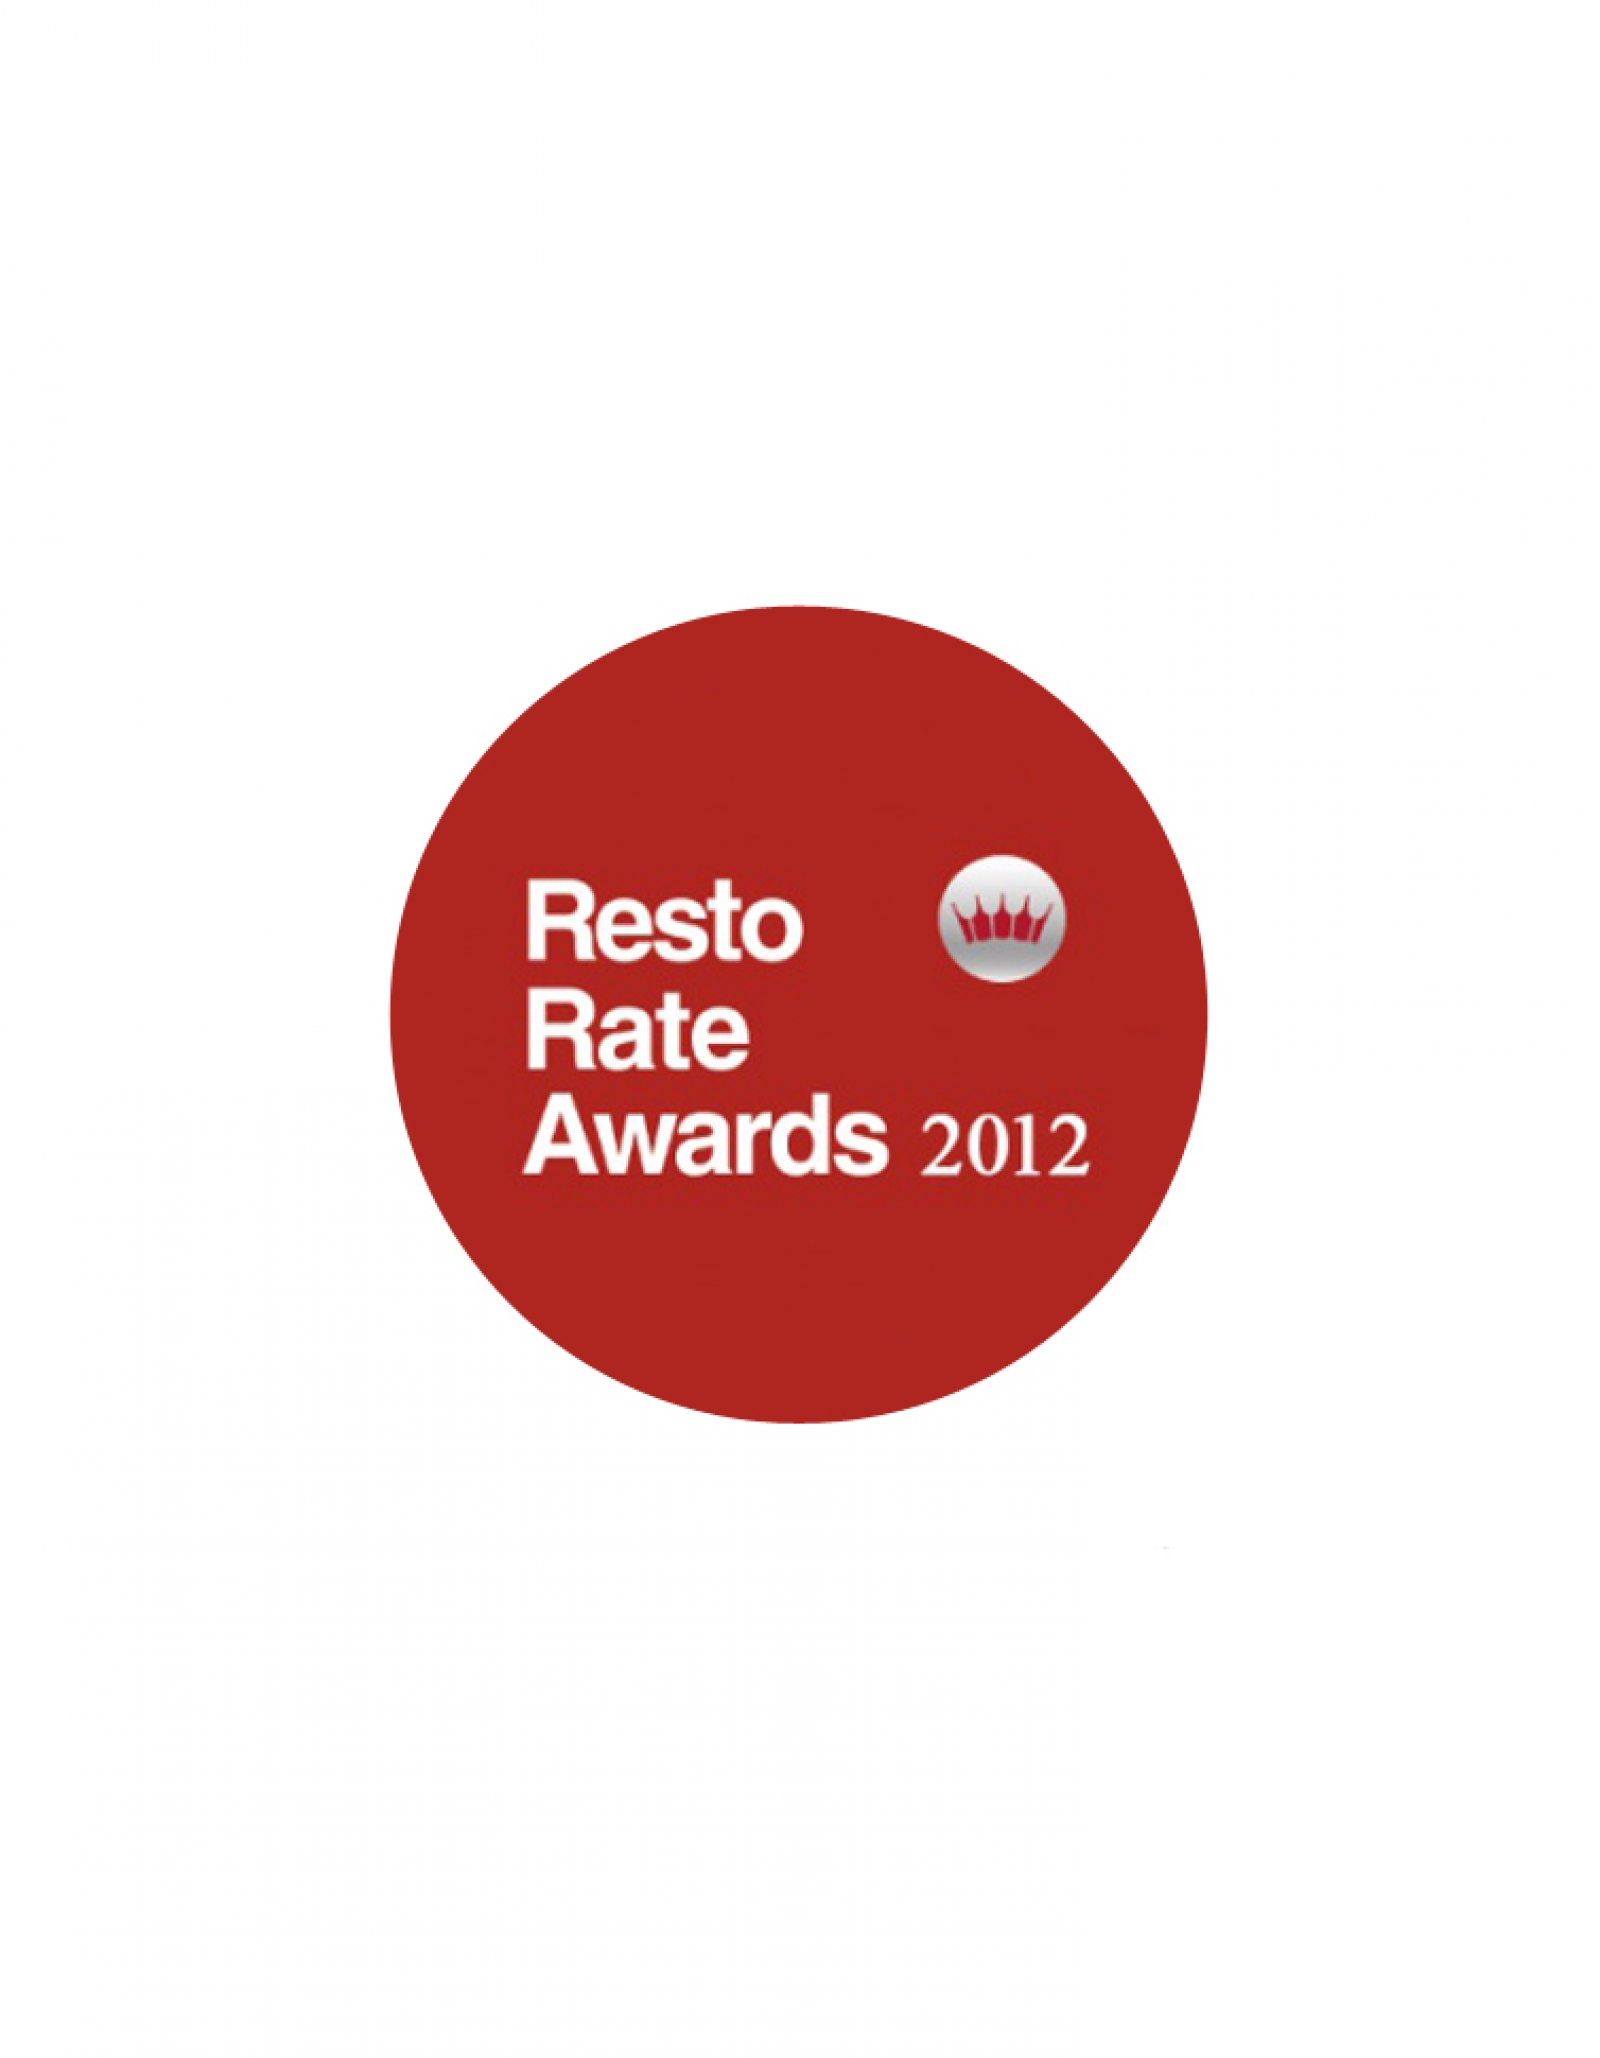 WHITE RABBIT – ЛАУРЕАТ RESTO RATE AWARDS 2012